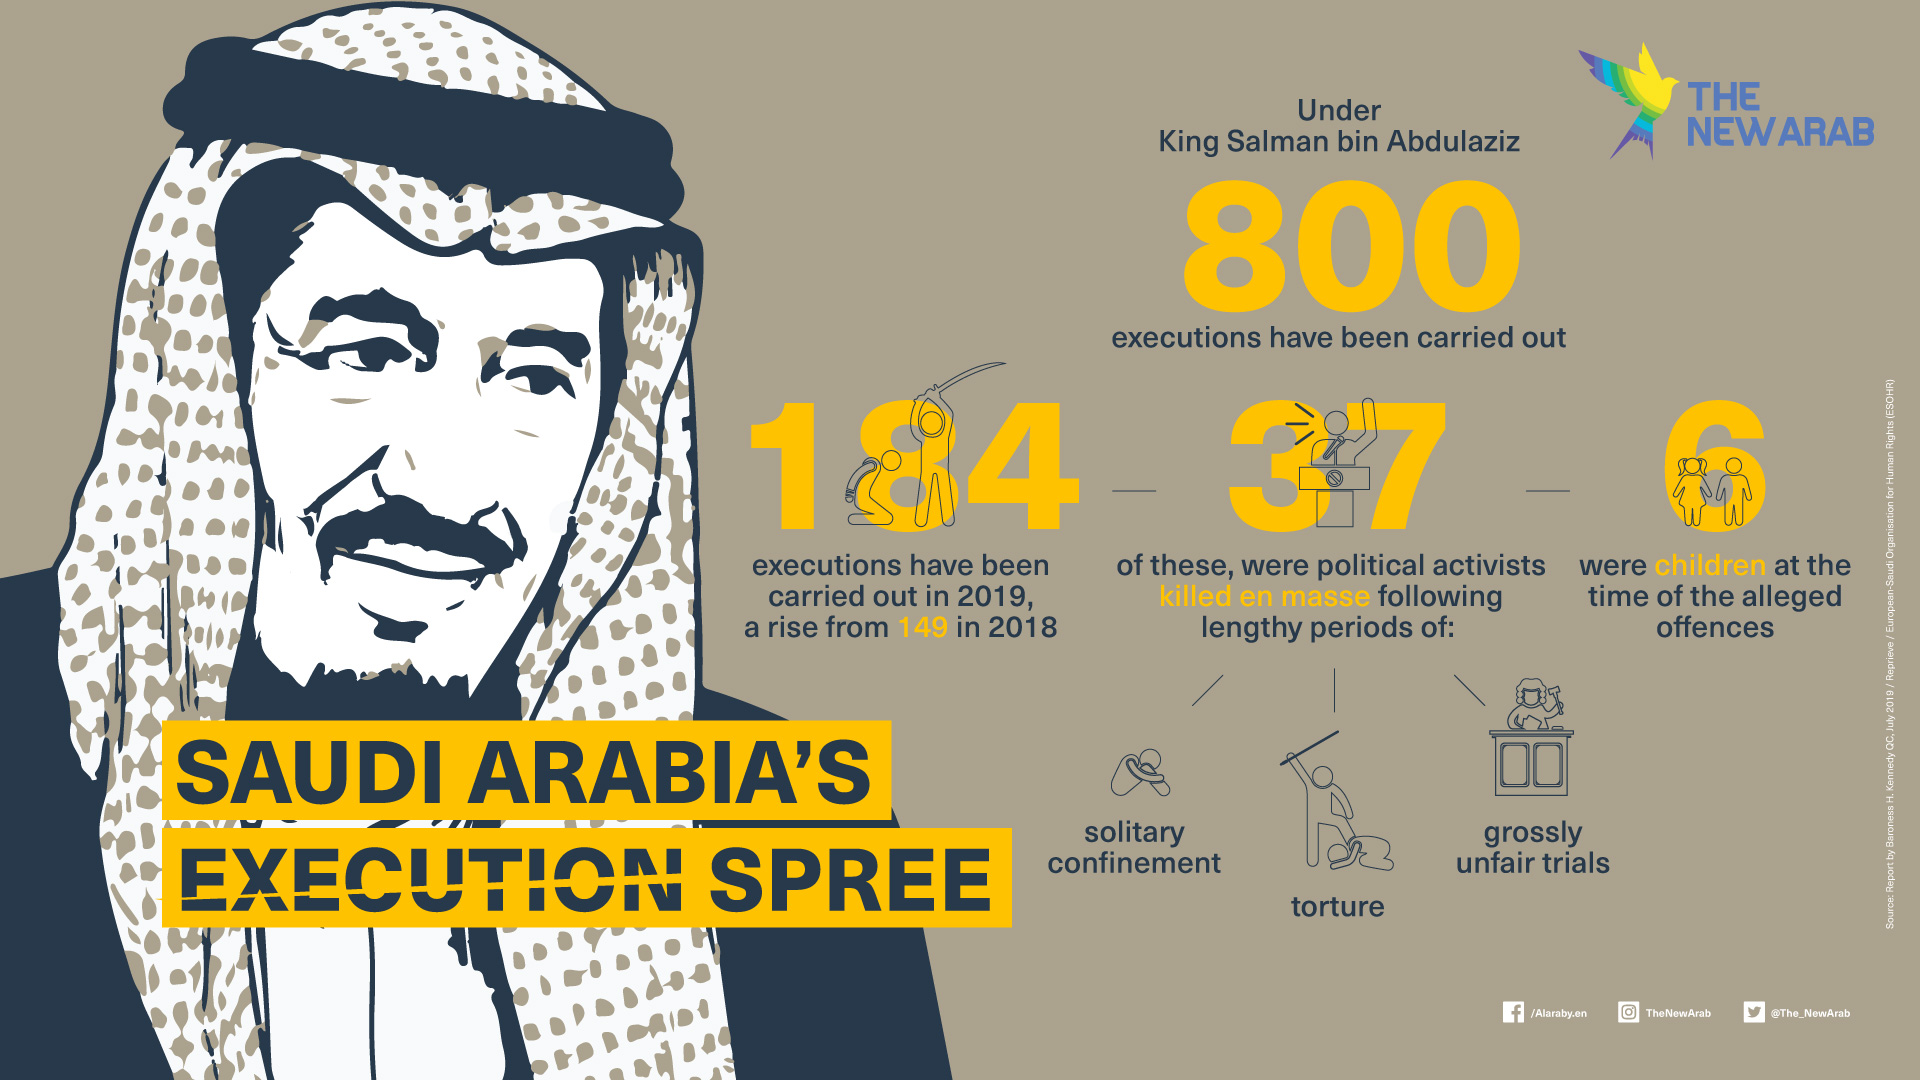 A survey of Saudi Arabia's execution numbers under King Salman bin Abdulaziz